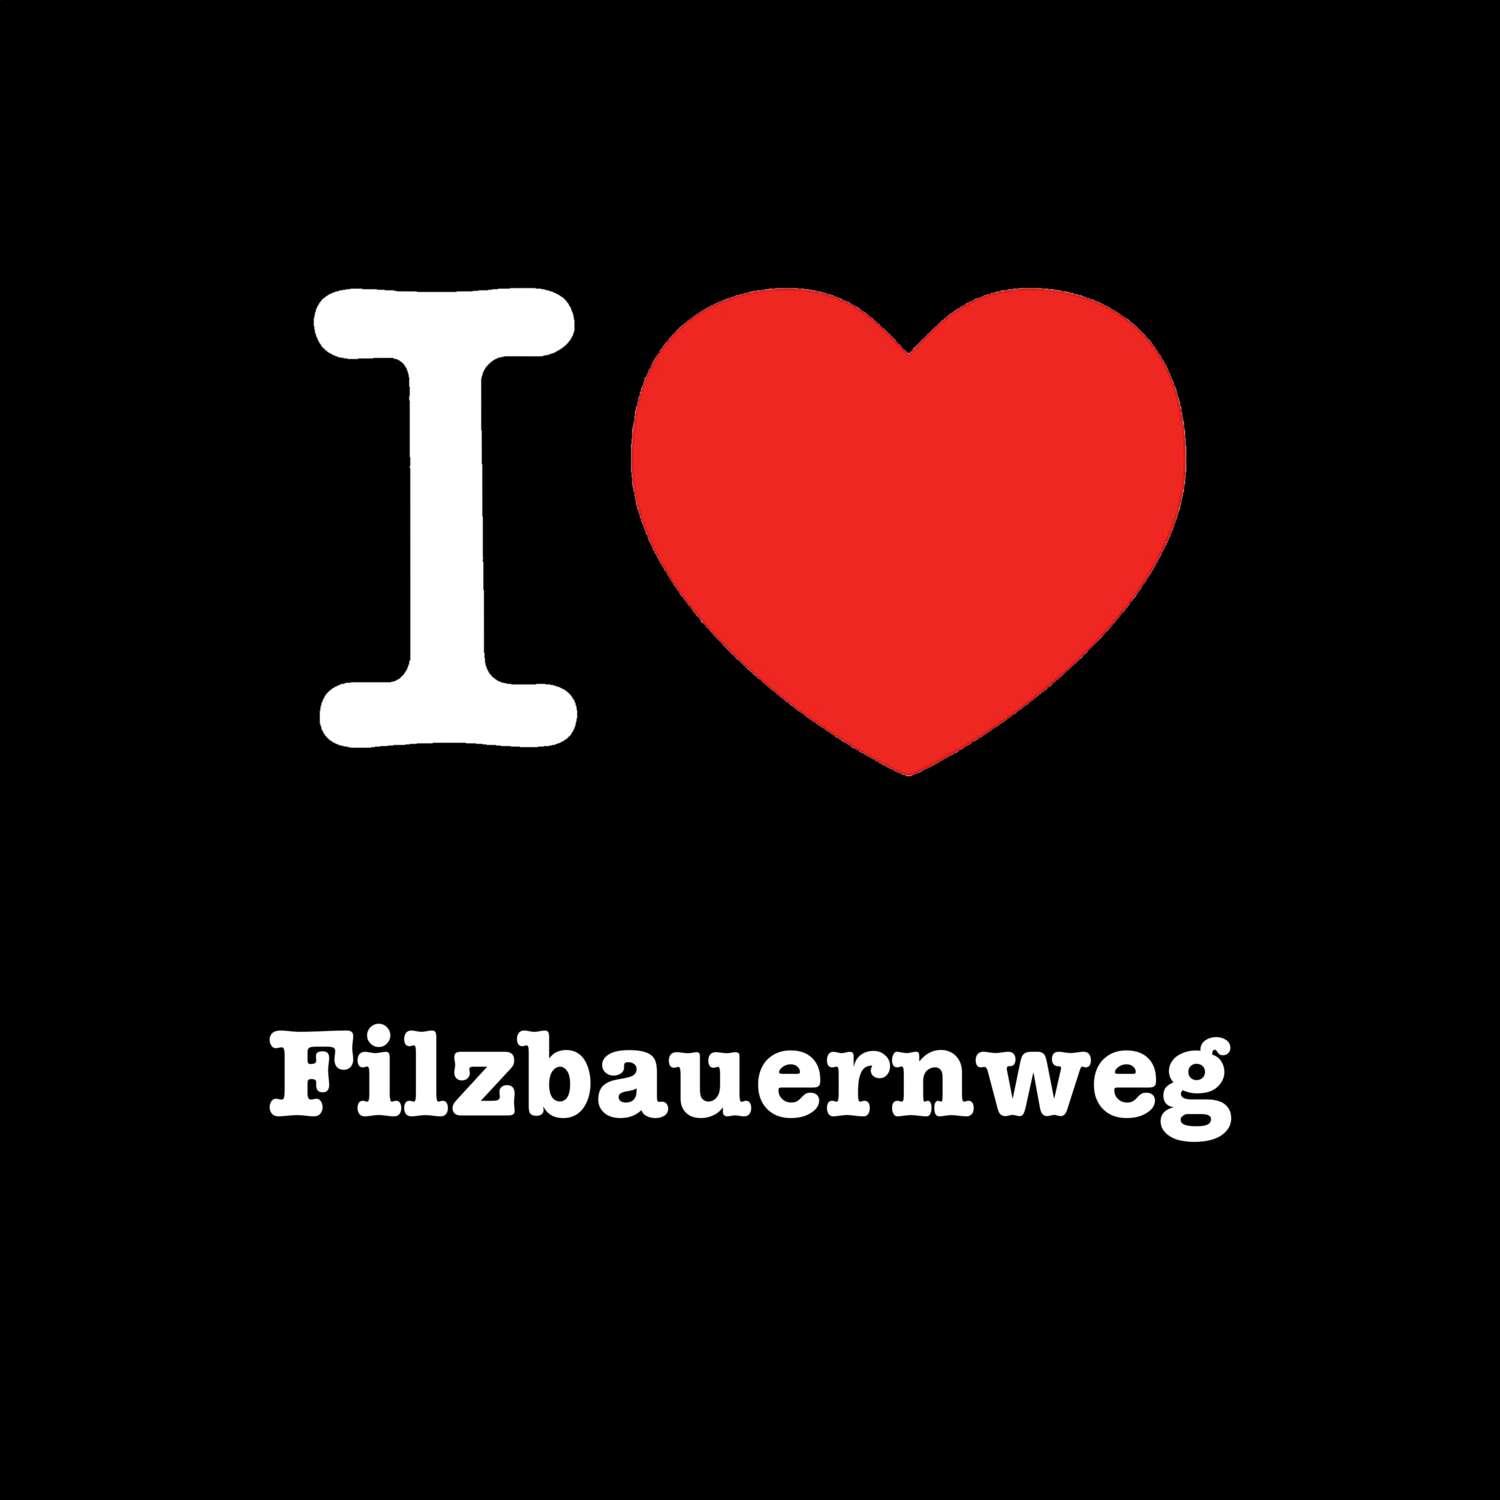 Filzbauernweg T-Shirt »I love«